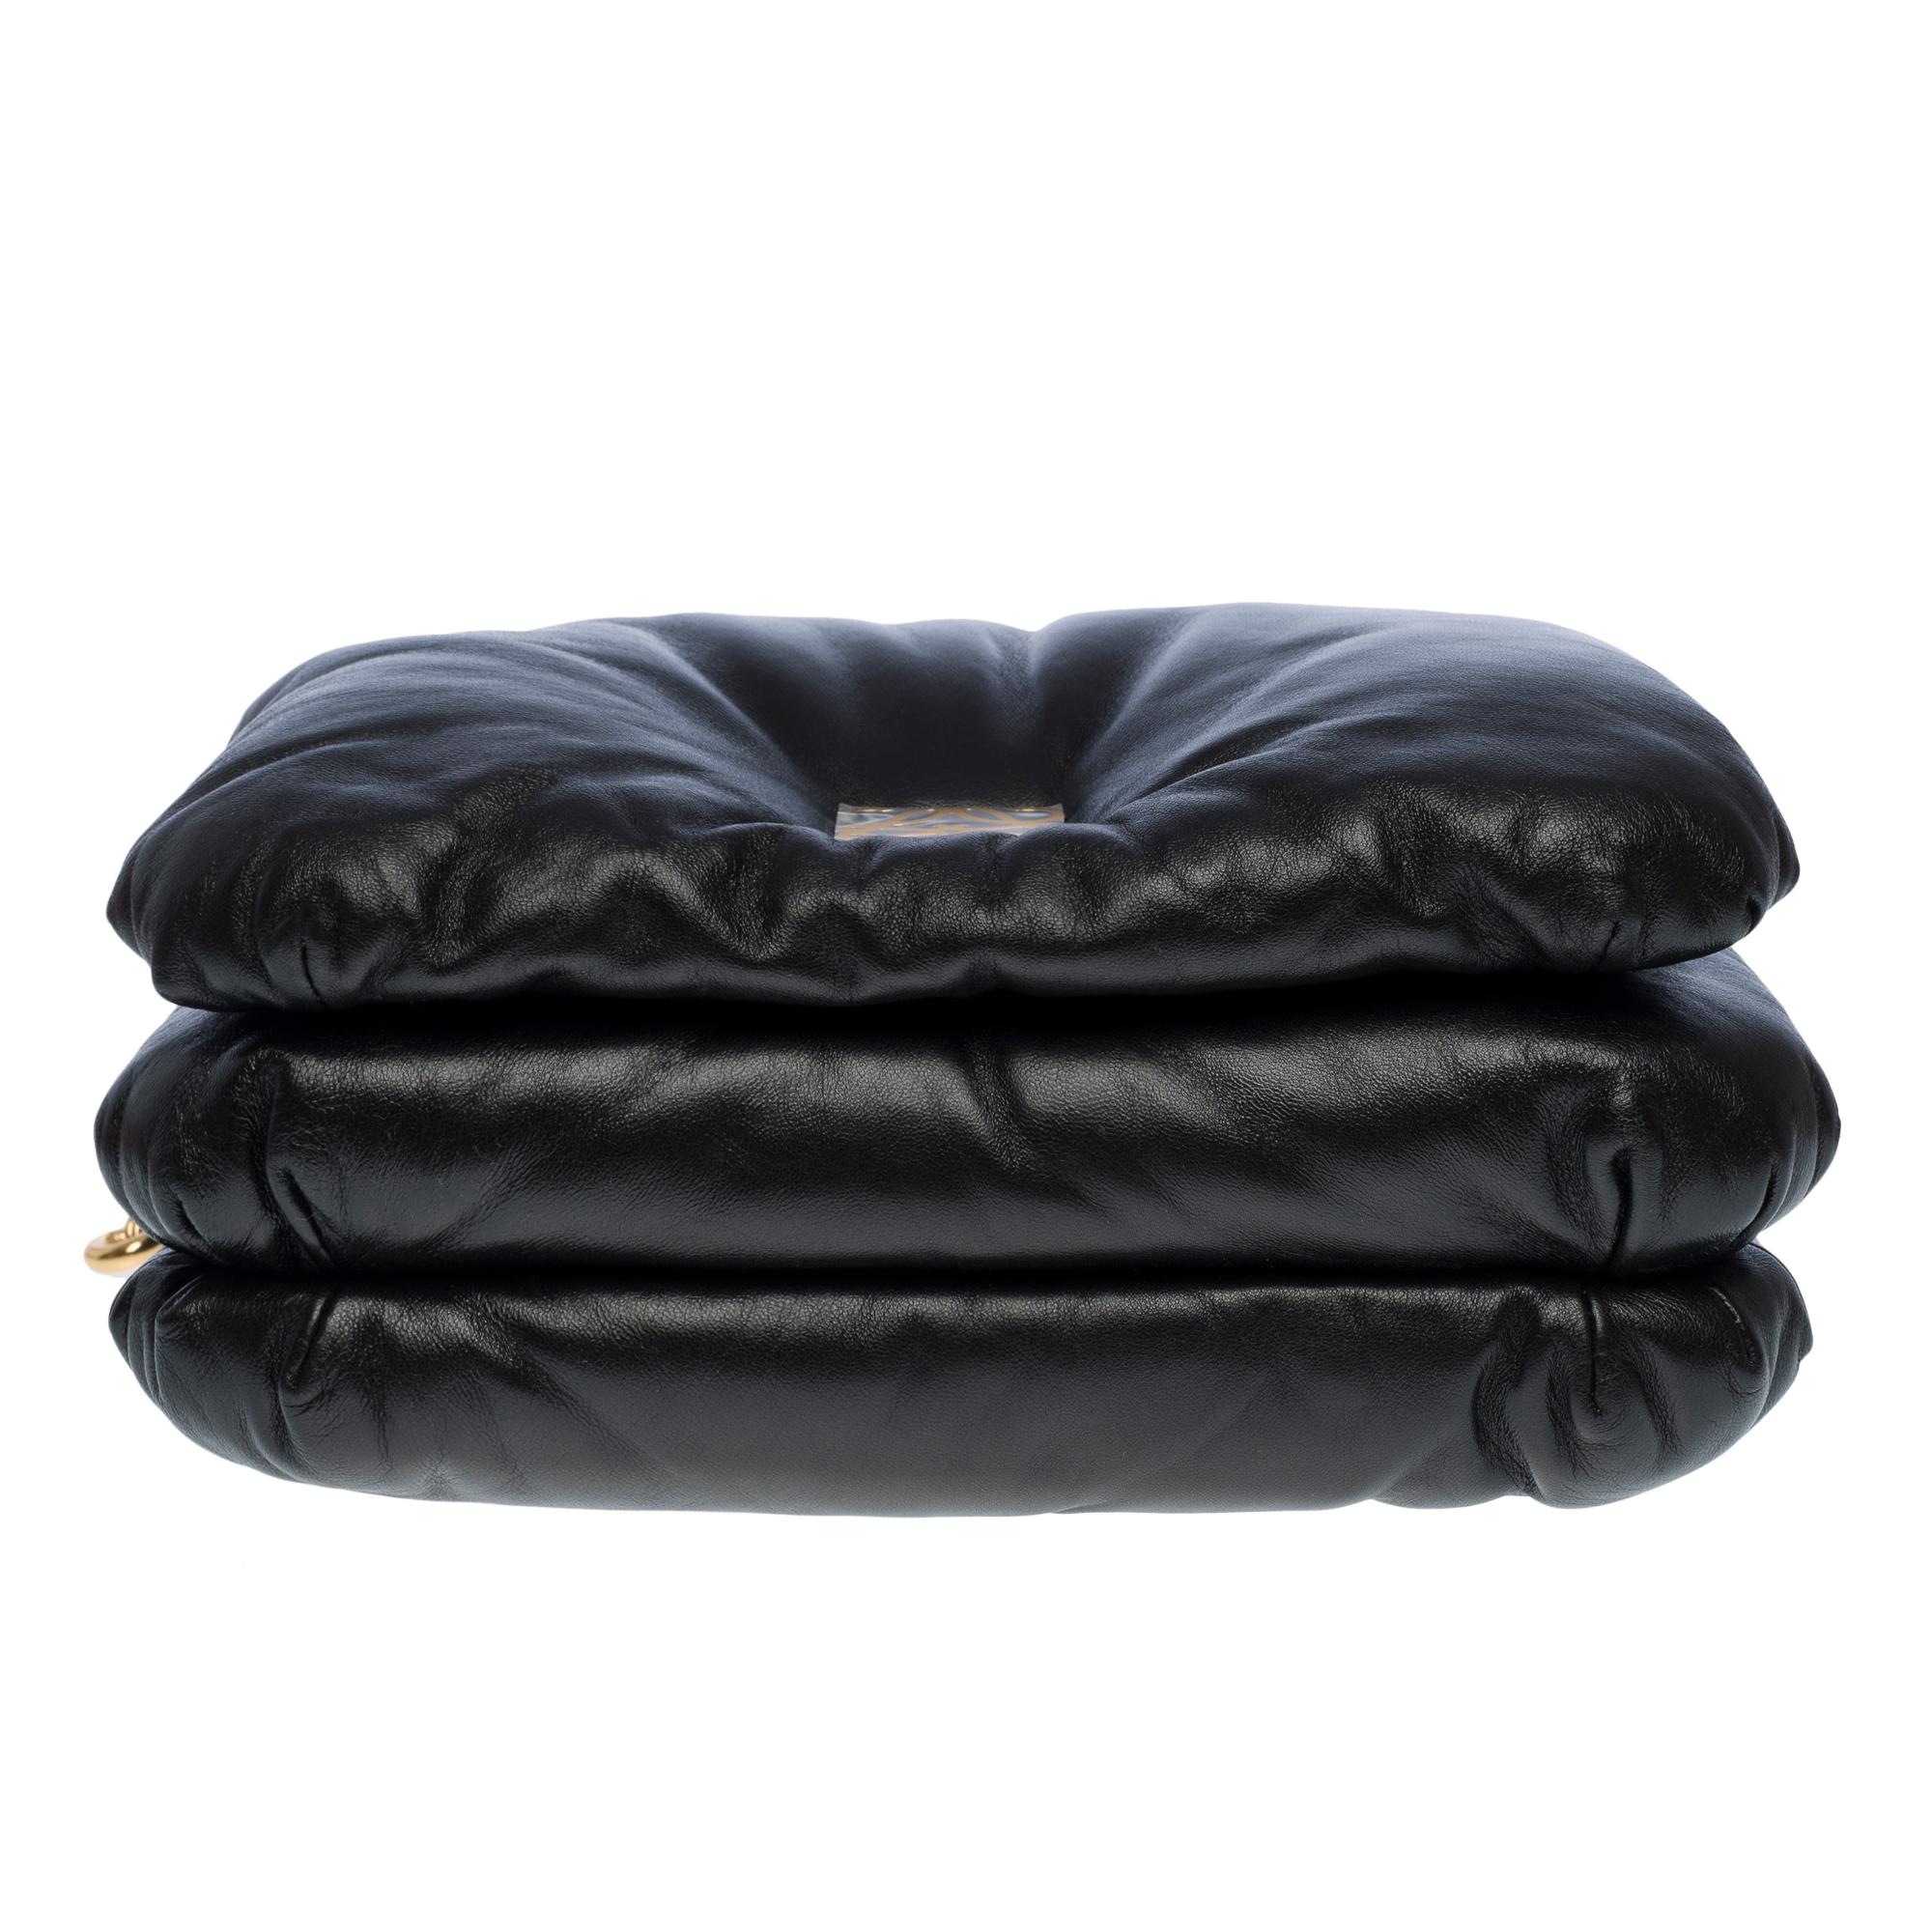 New Loewe Goya Puffer shoulder bag in black shiny lambskin leather, GHW 4